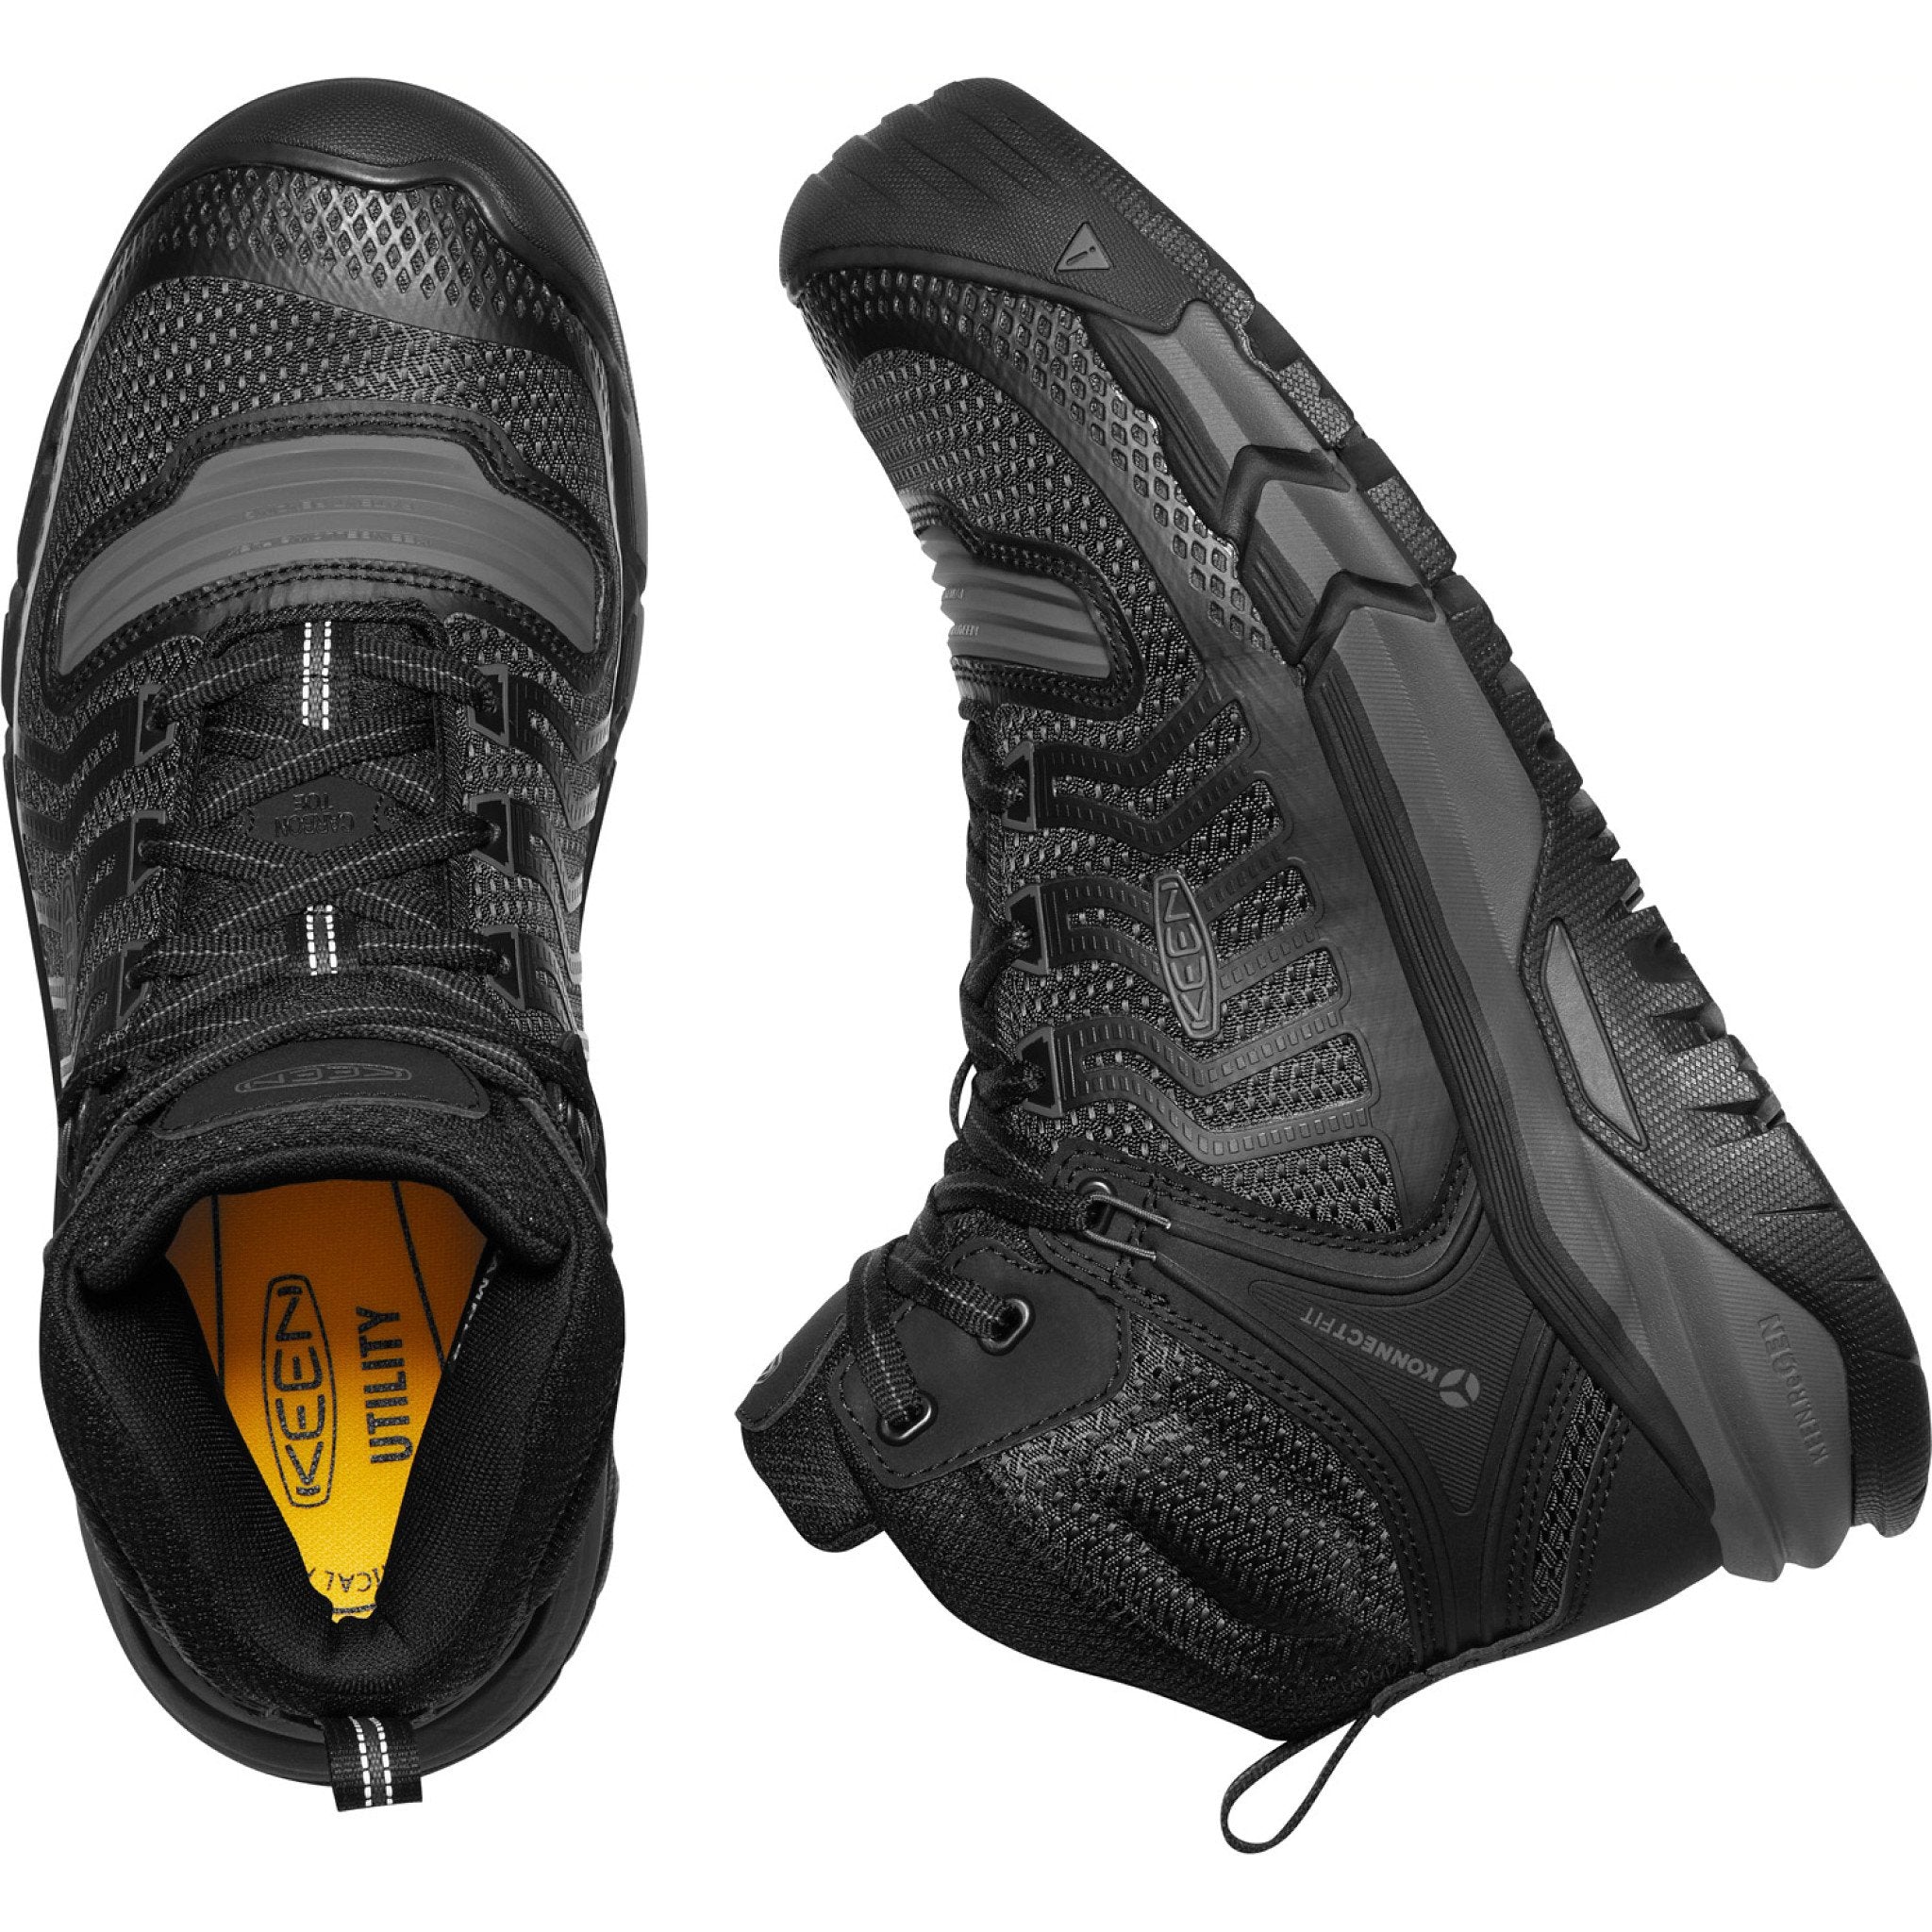 Keen Utility Men's Kansas City Mid Carbon-Fiber Toe Work Boot- 1025617  - Overlook Boots